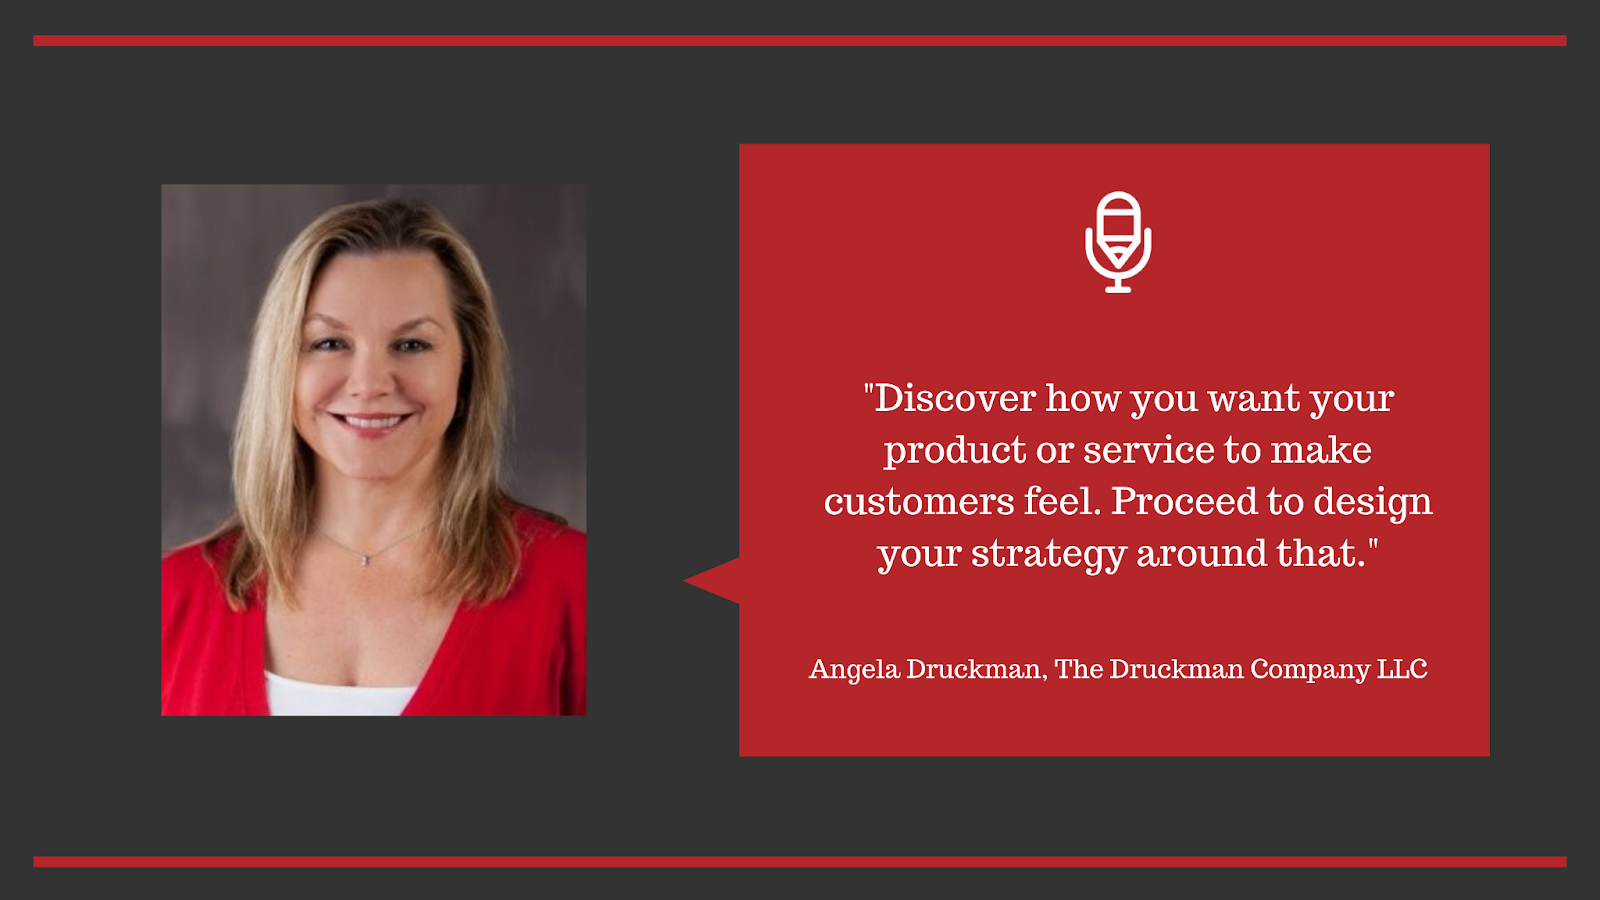 Angela Druckman, The Druckman Company LLC